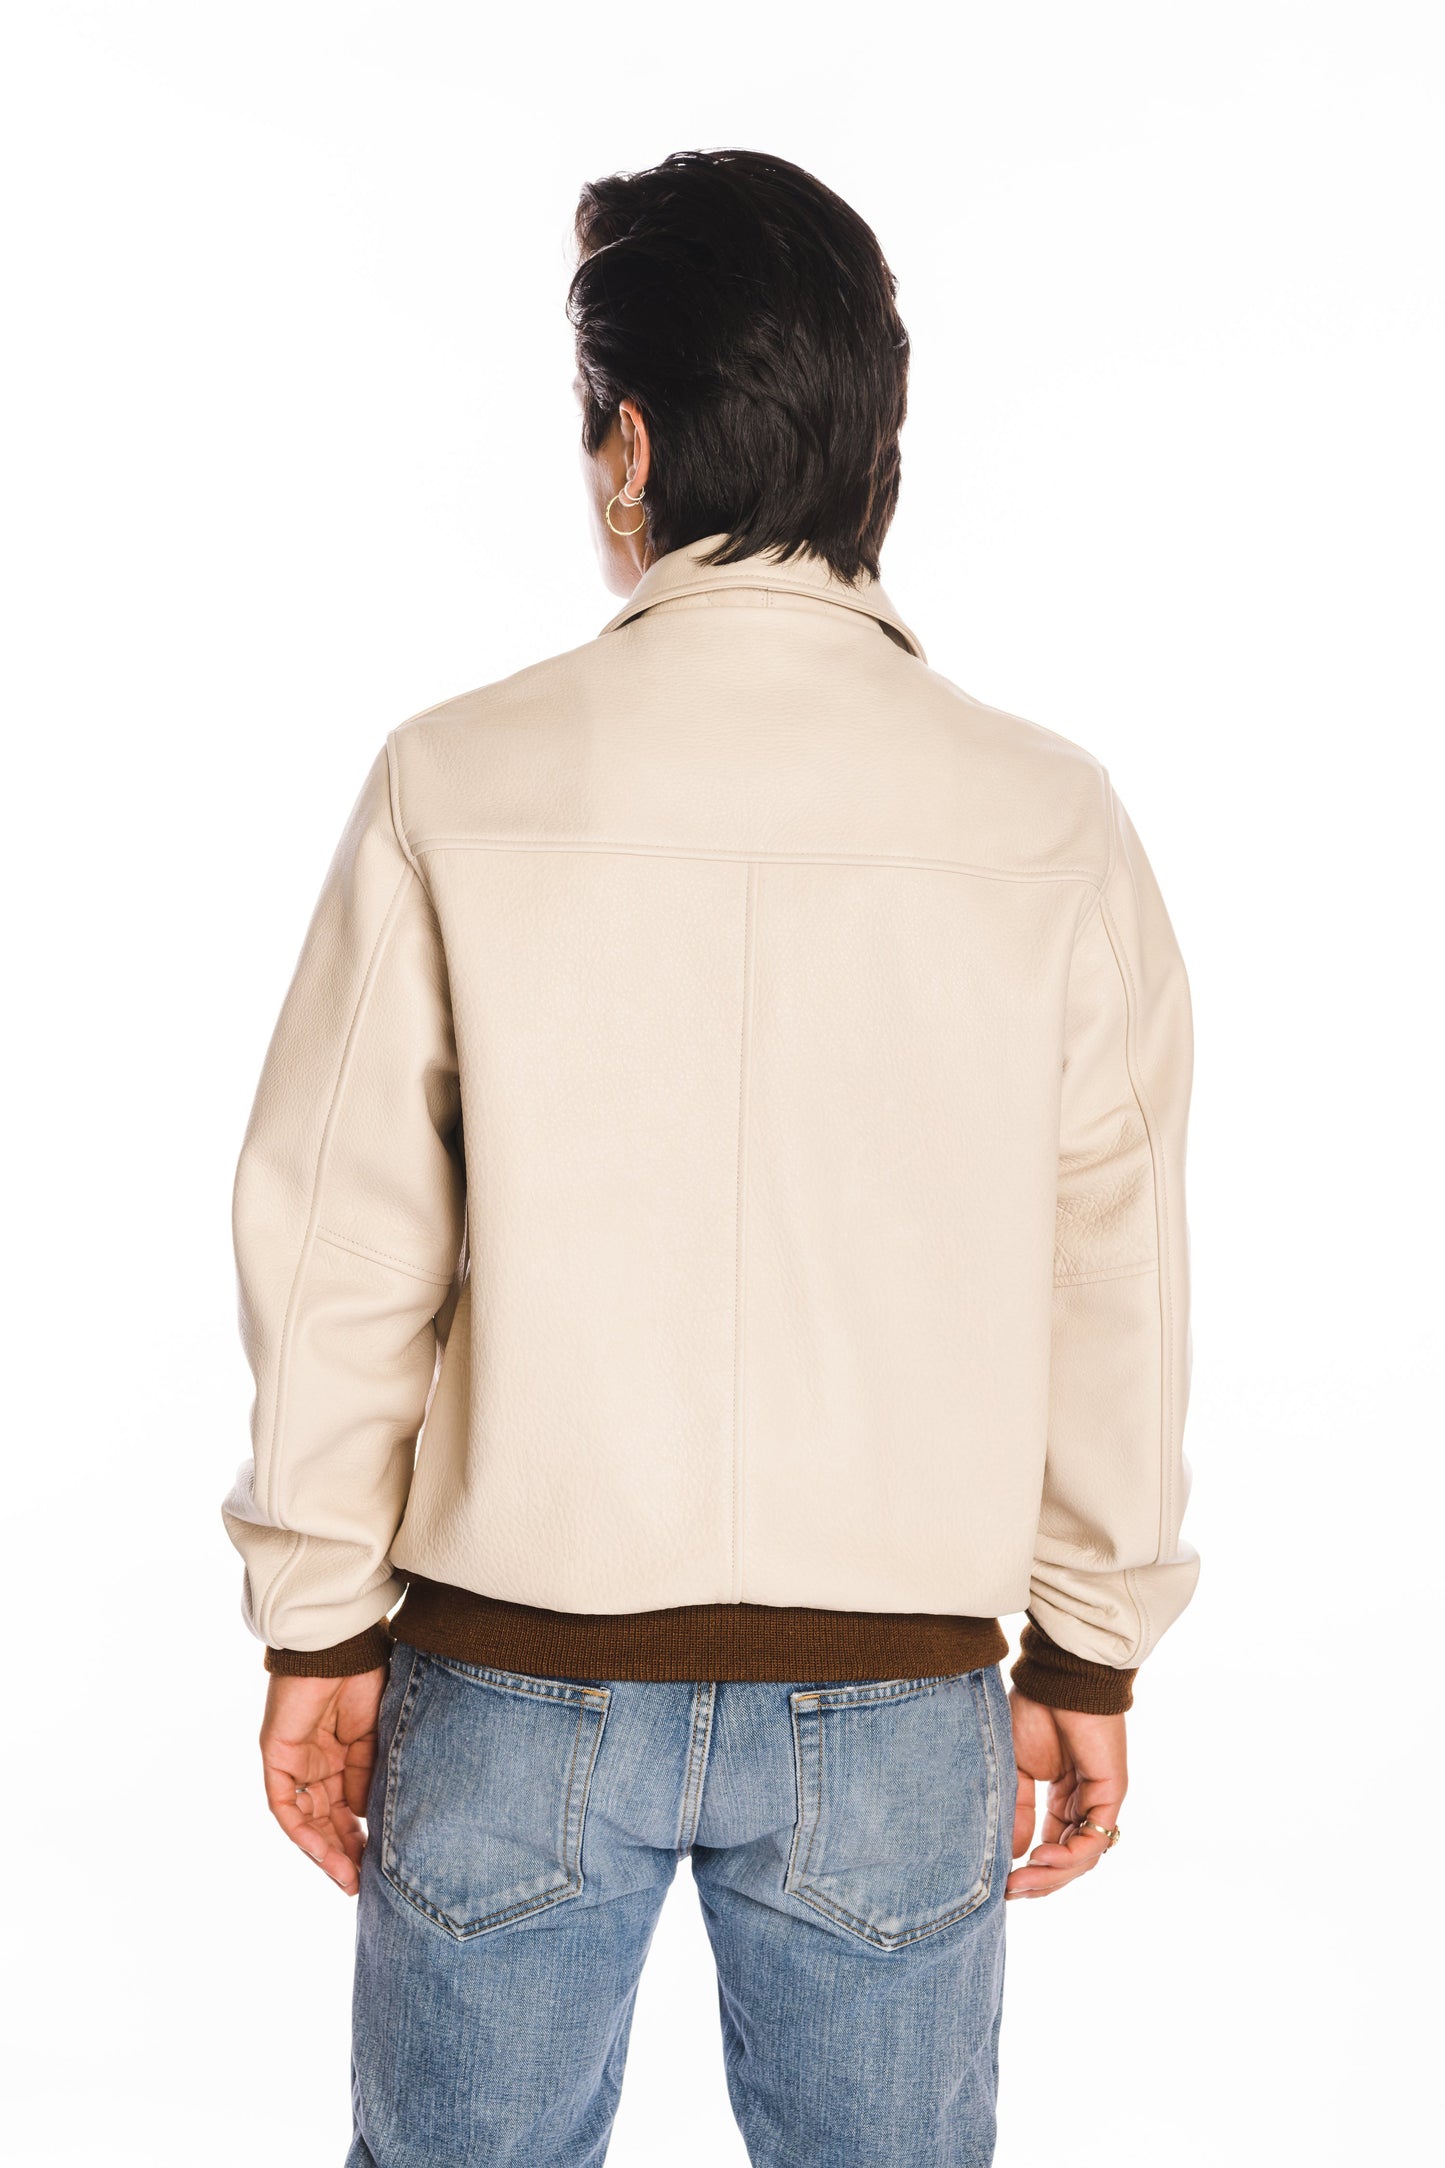 Bedford Leather Baseball Jacket in Ivory